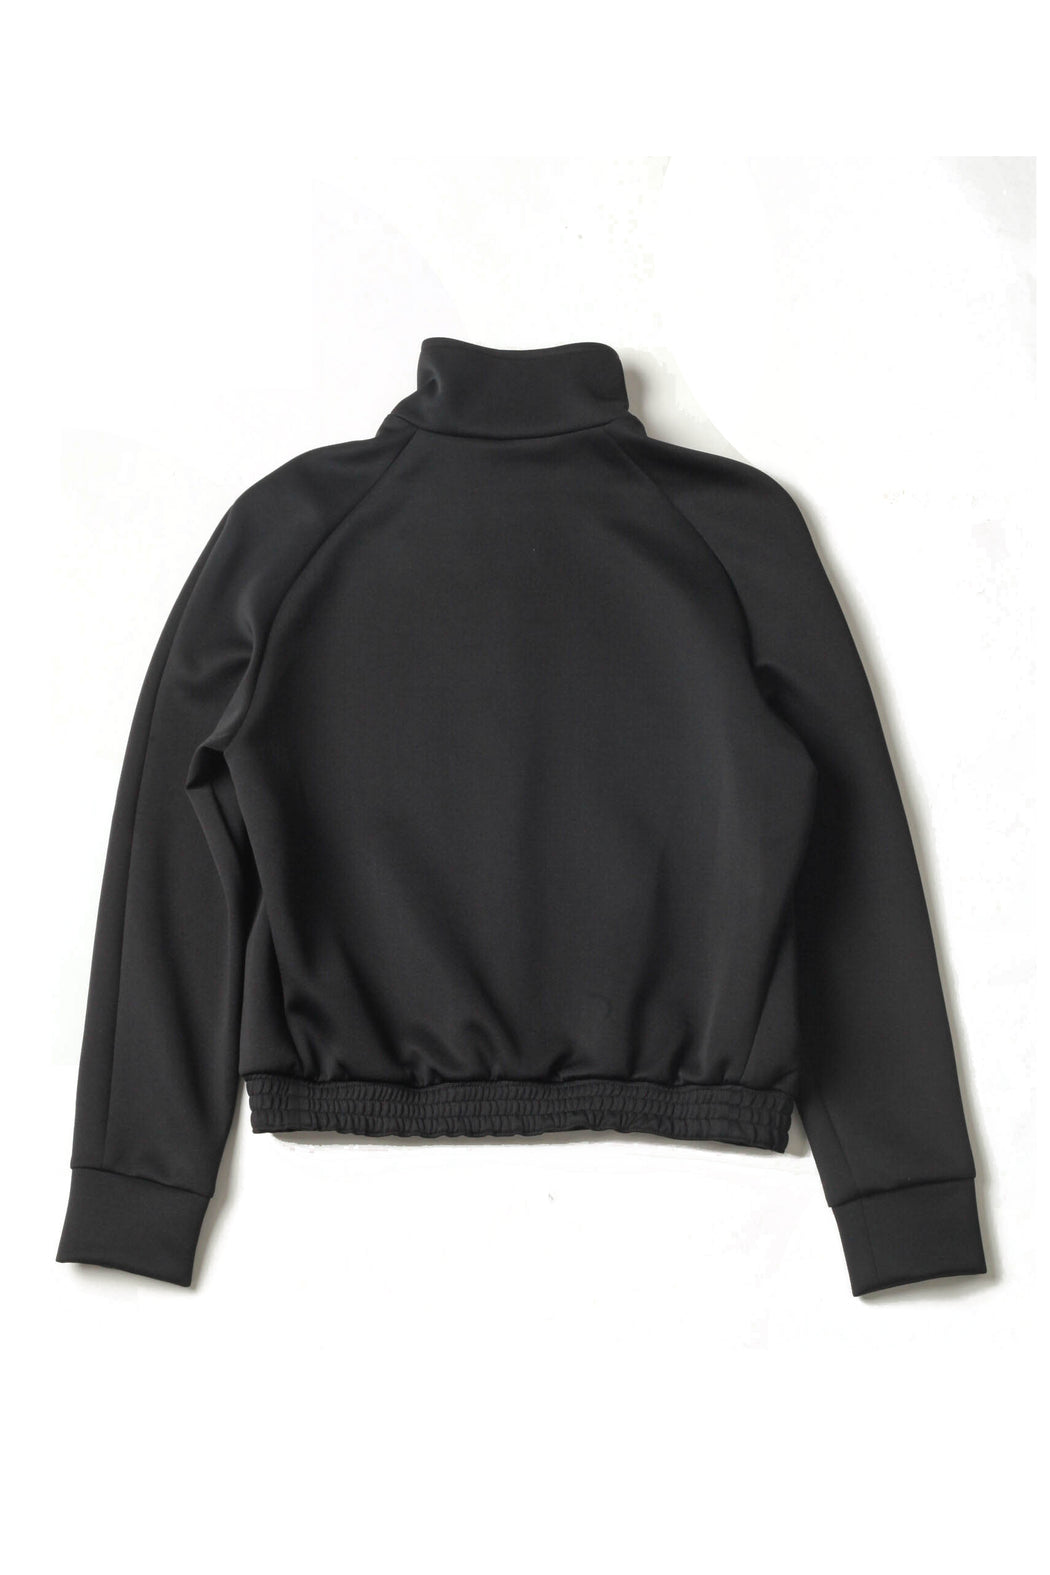 Hallepoort - Black Track Jersey Jacket